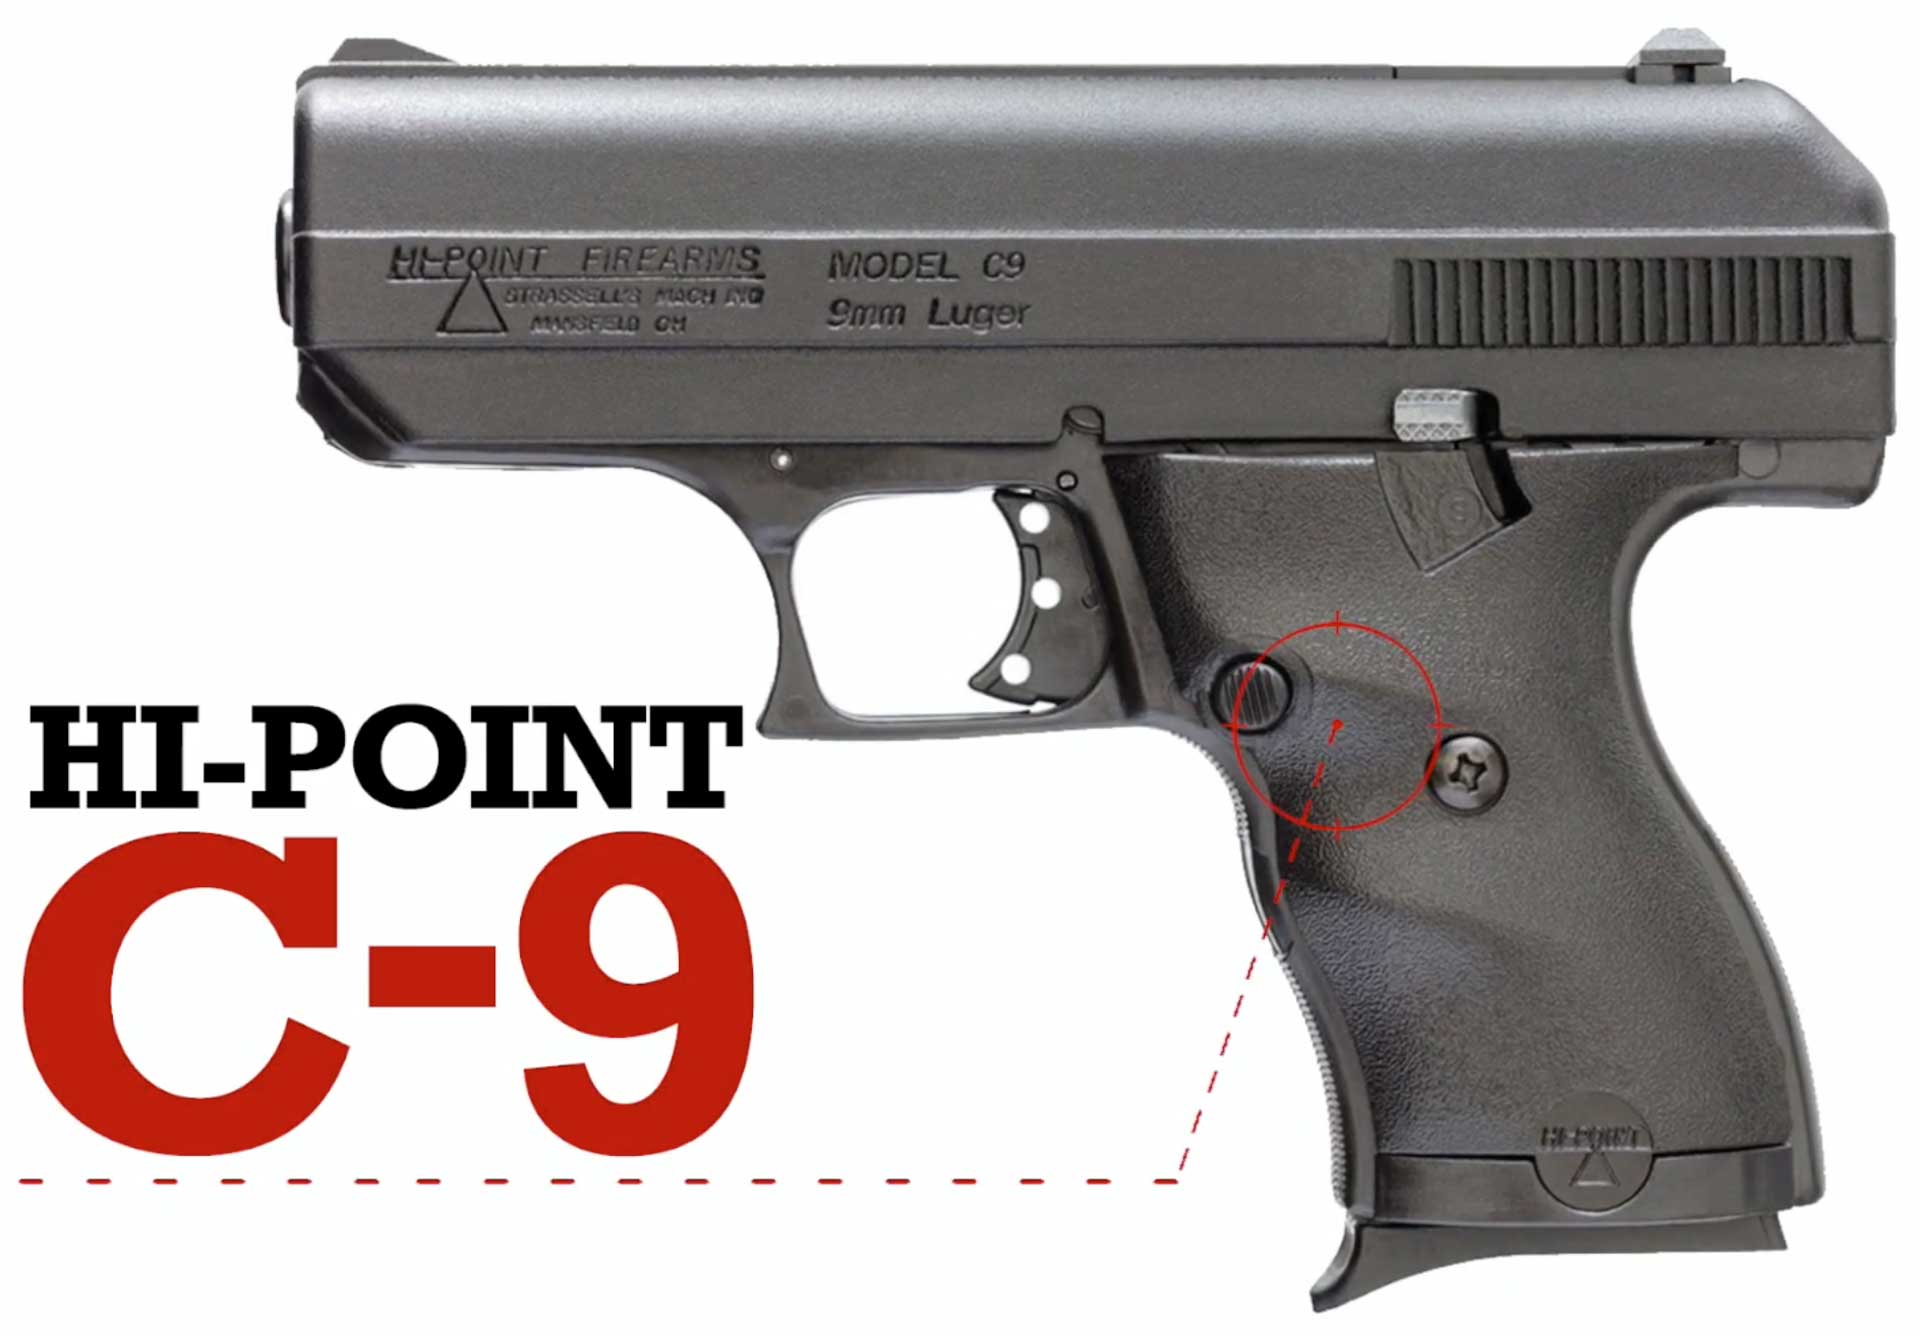 left side handgun pistol black gun text on image noting "HI-POINT C-9"